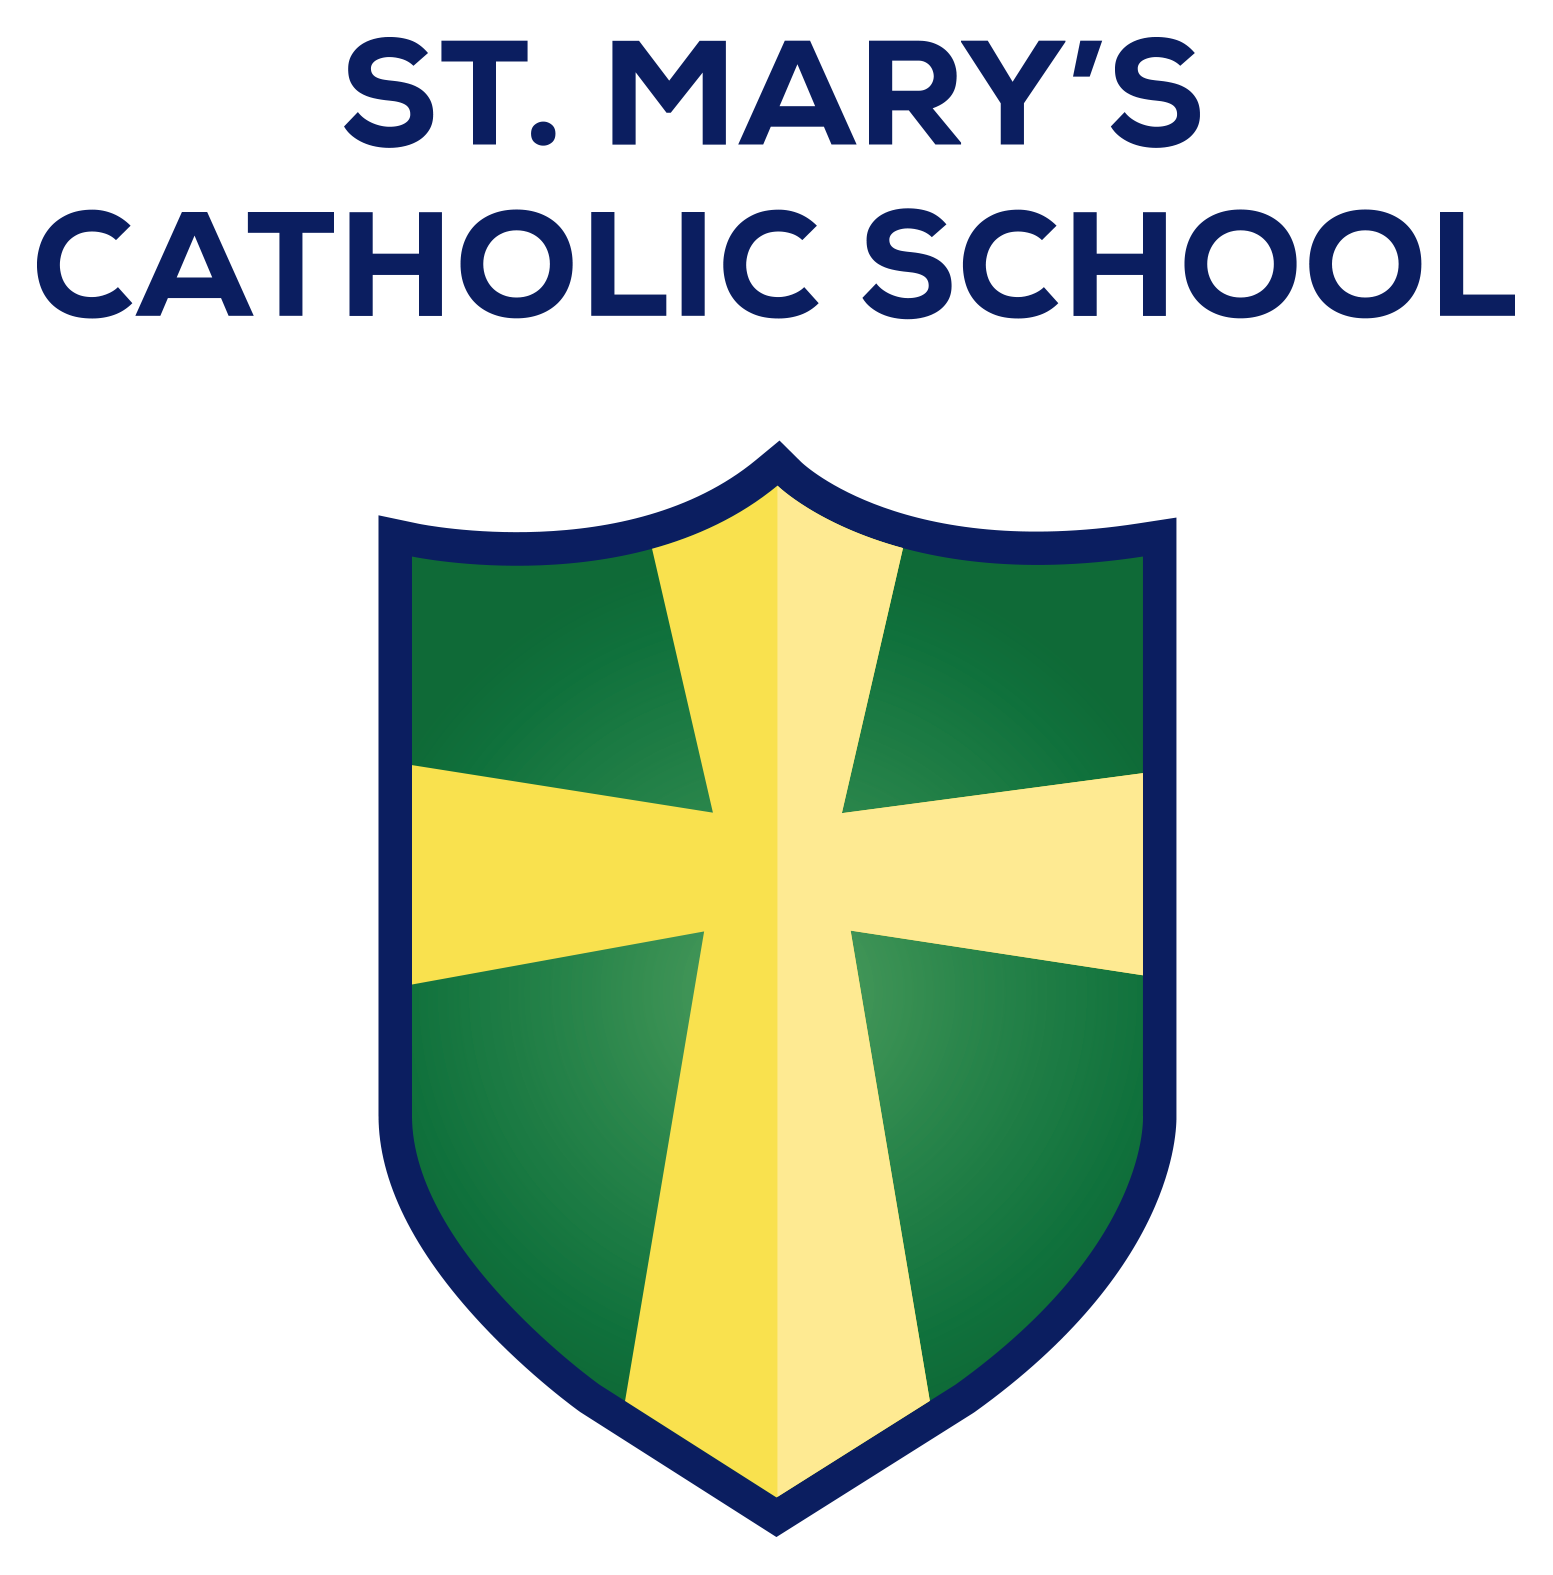 St. Mary’s Catholic School